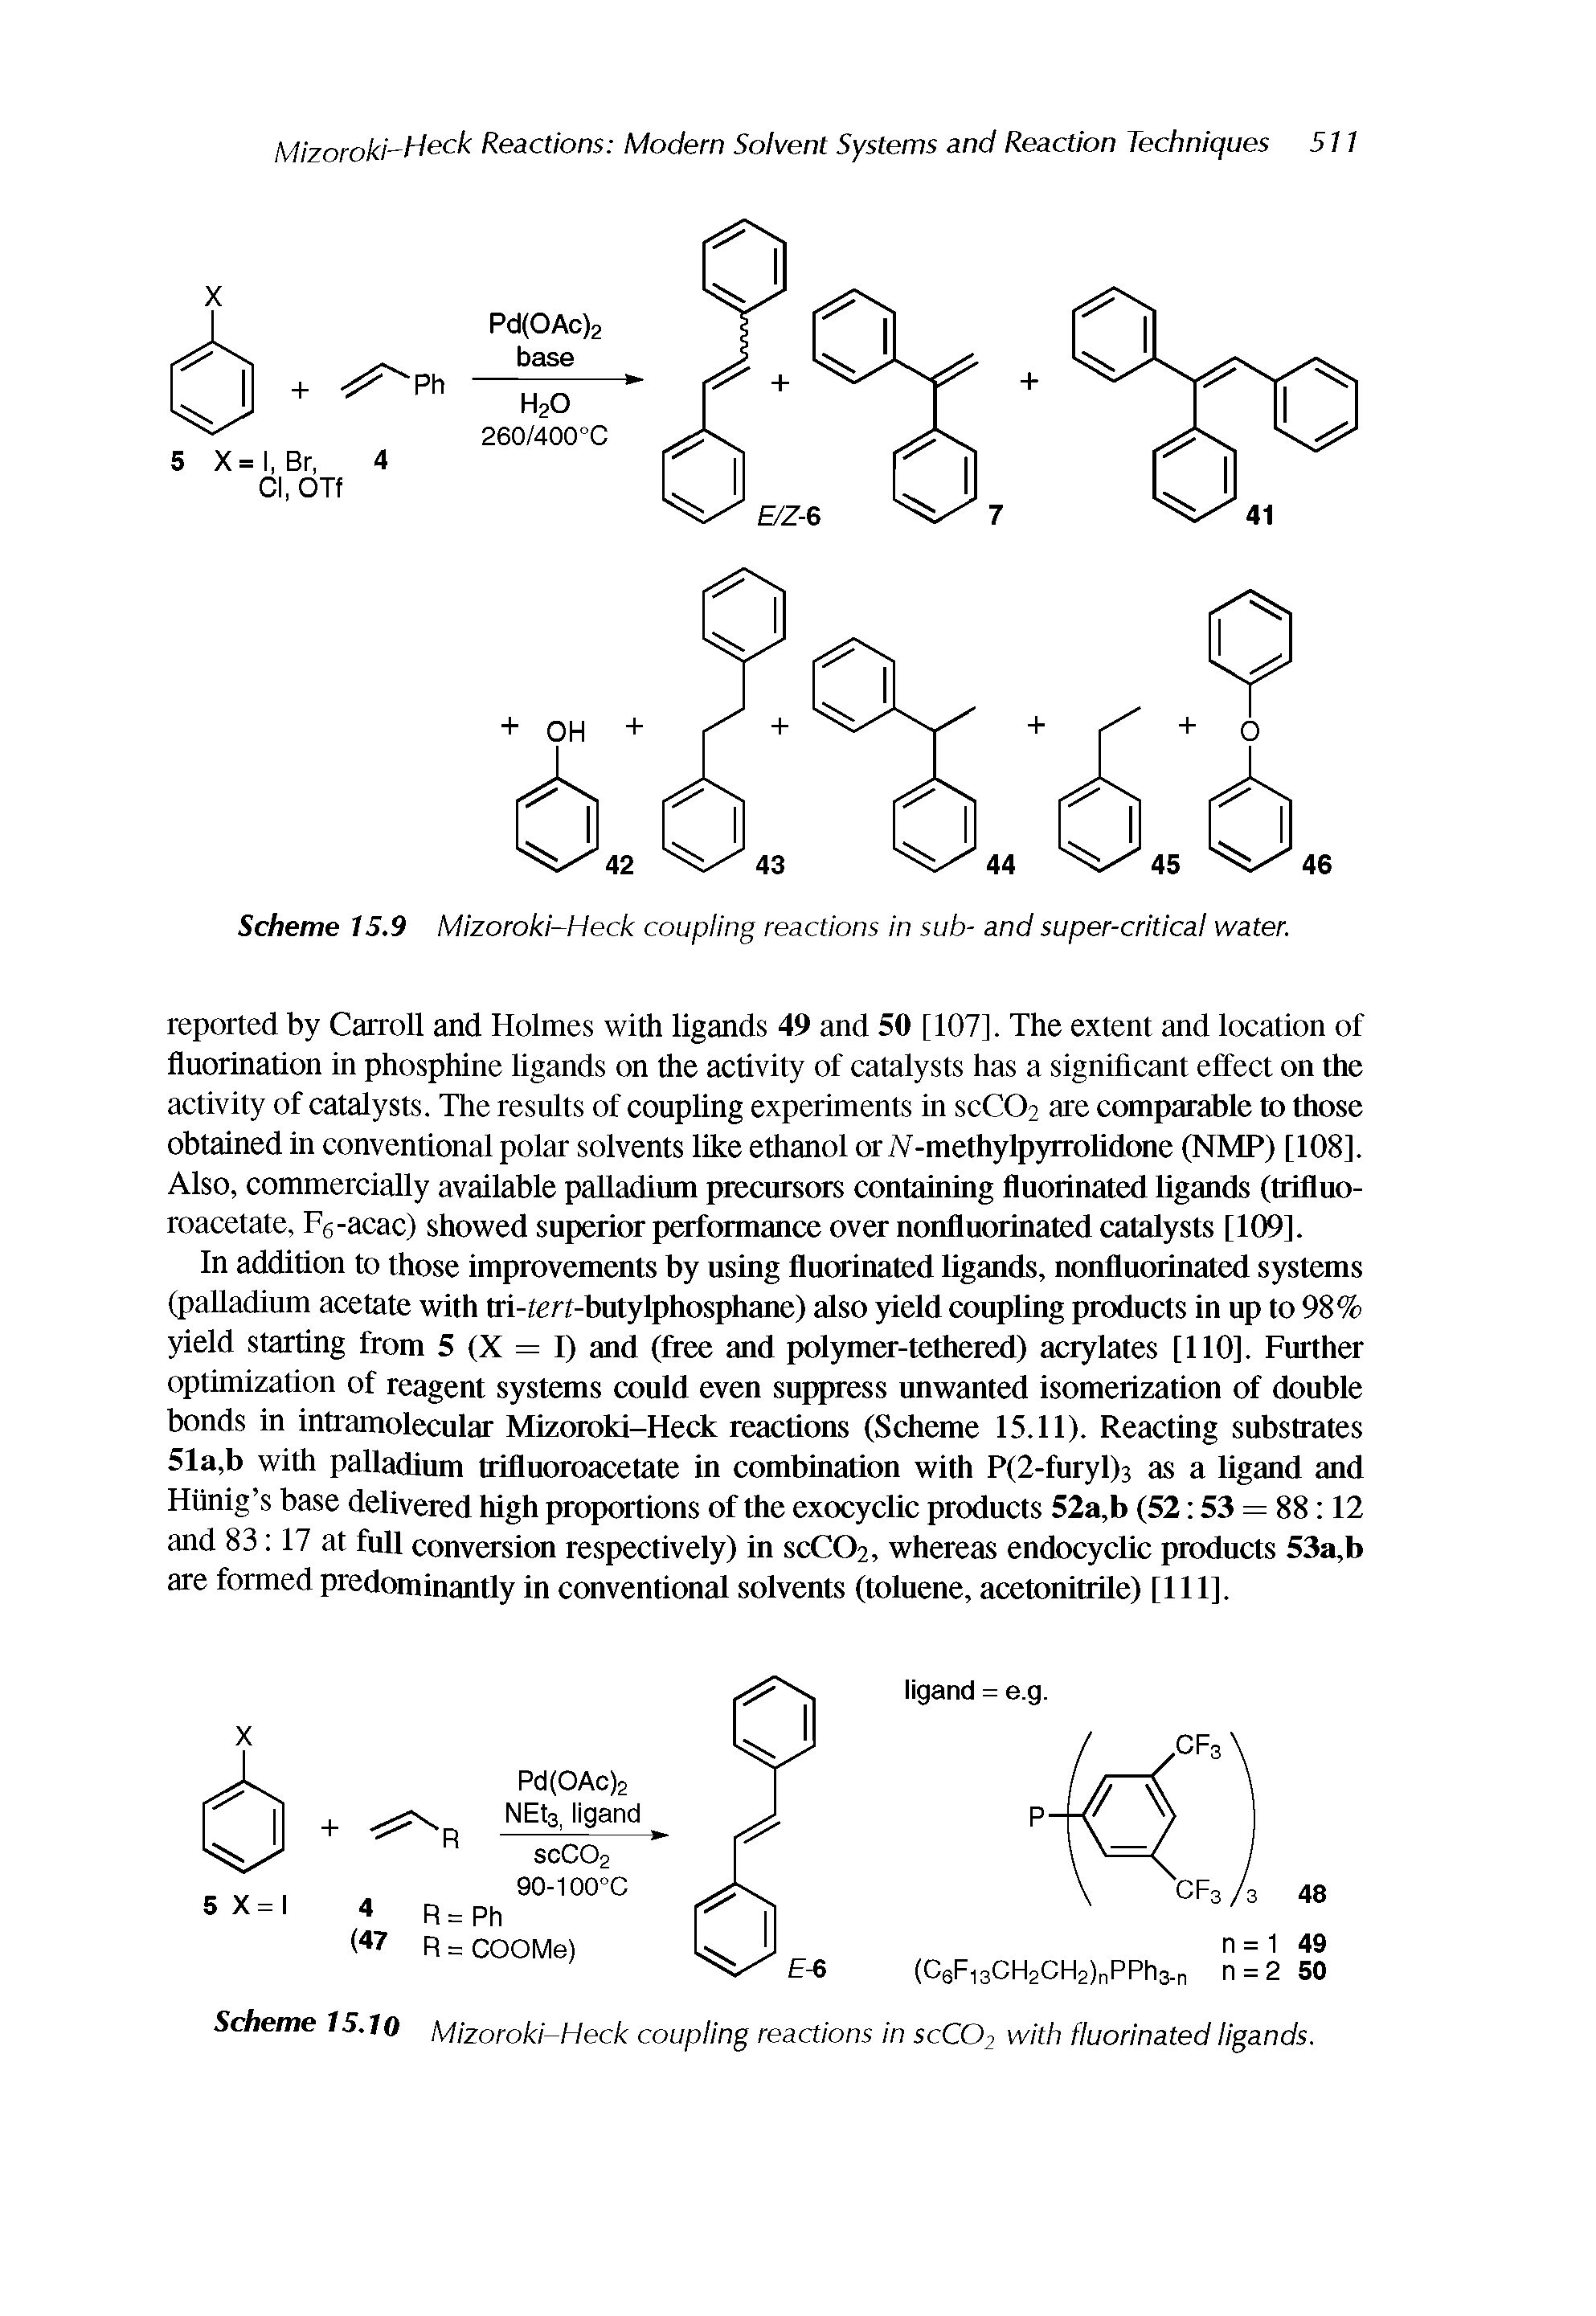 Scheme 15.10 Mizoroki-Heck coupling reactions in SCCO2 with fluorinated ligands.